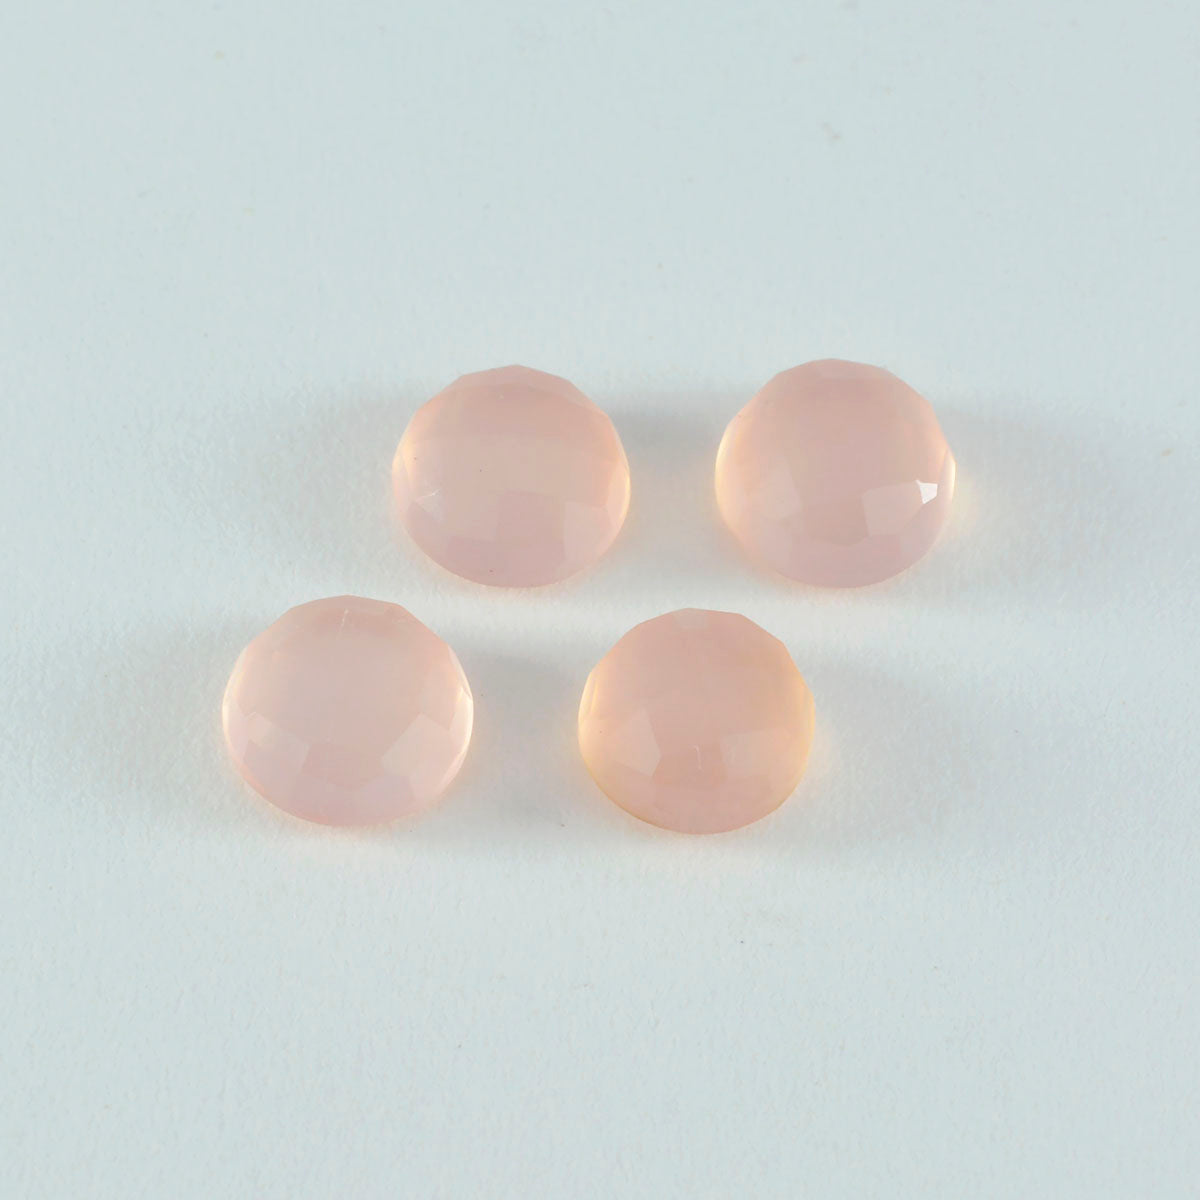 Riyogems 1PC Pink Rose Quartz Faceted 14x14 mm Round Shape nice-looking Quality Loose Gem